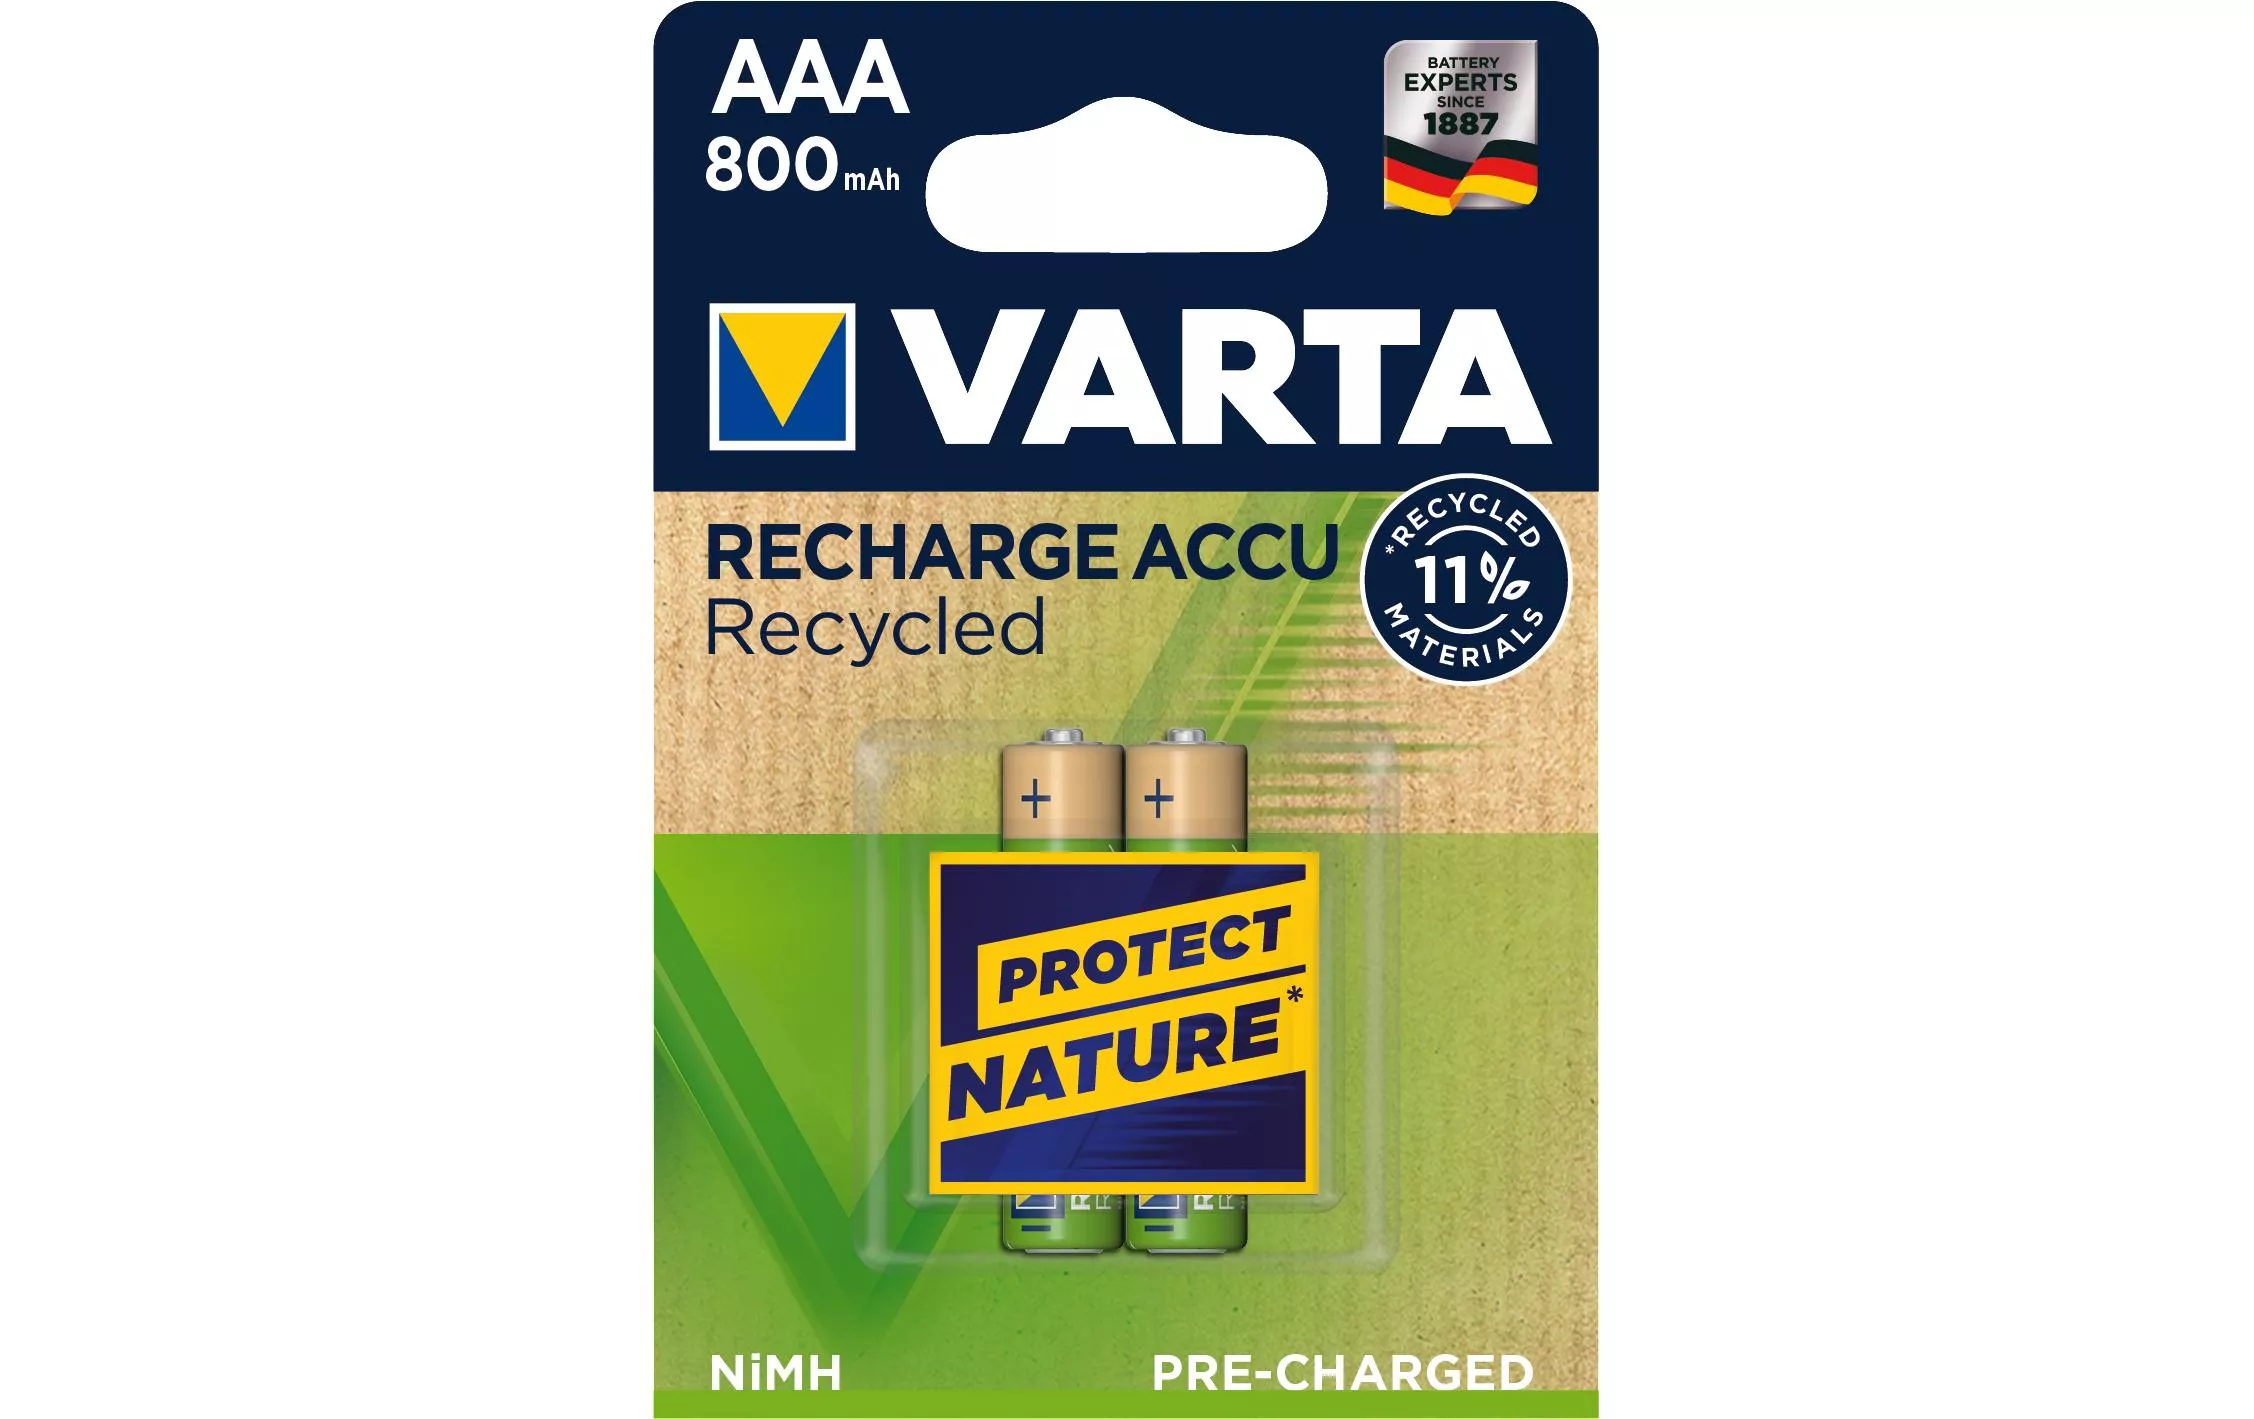 Batterie Recharge Accu Recycled AAA 800mAh  800 mAh